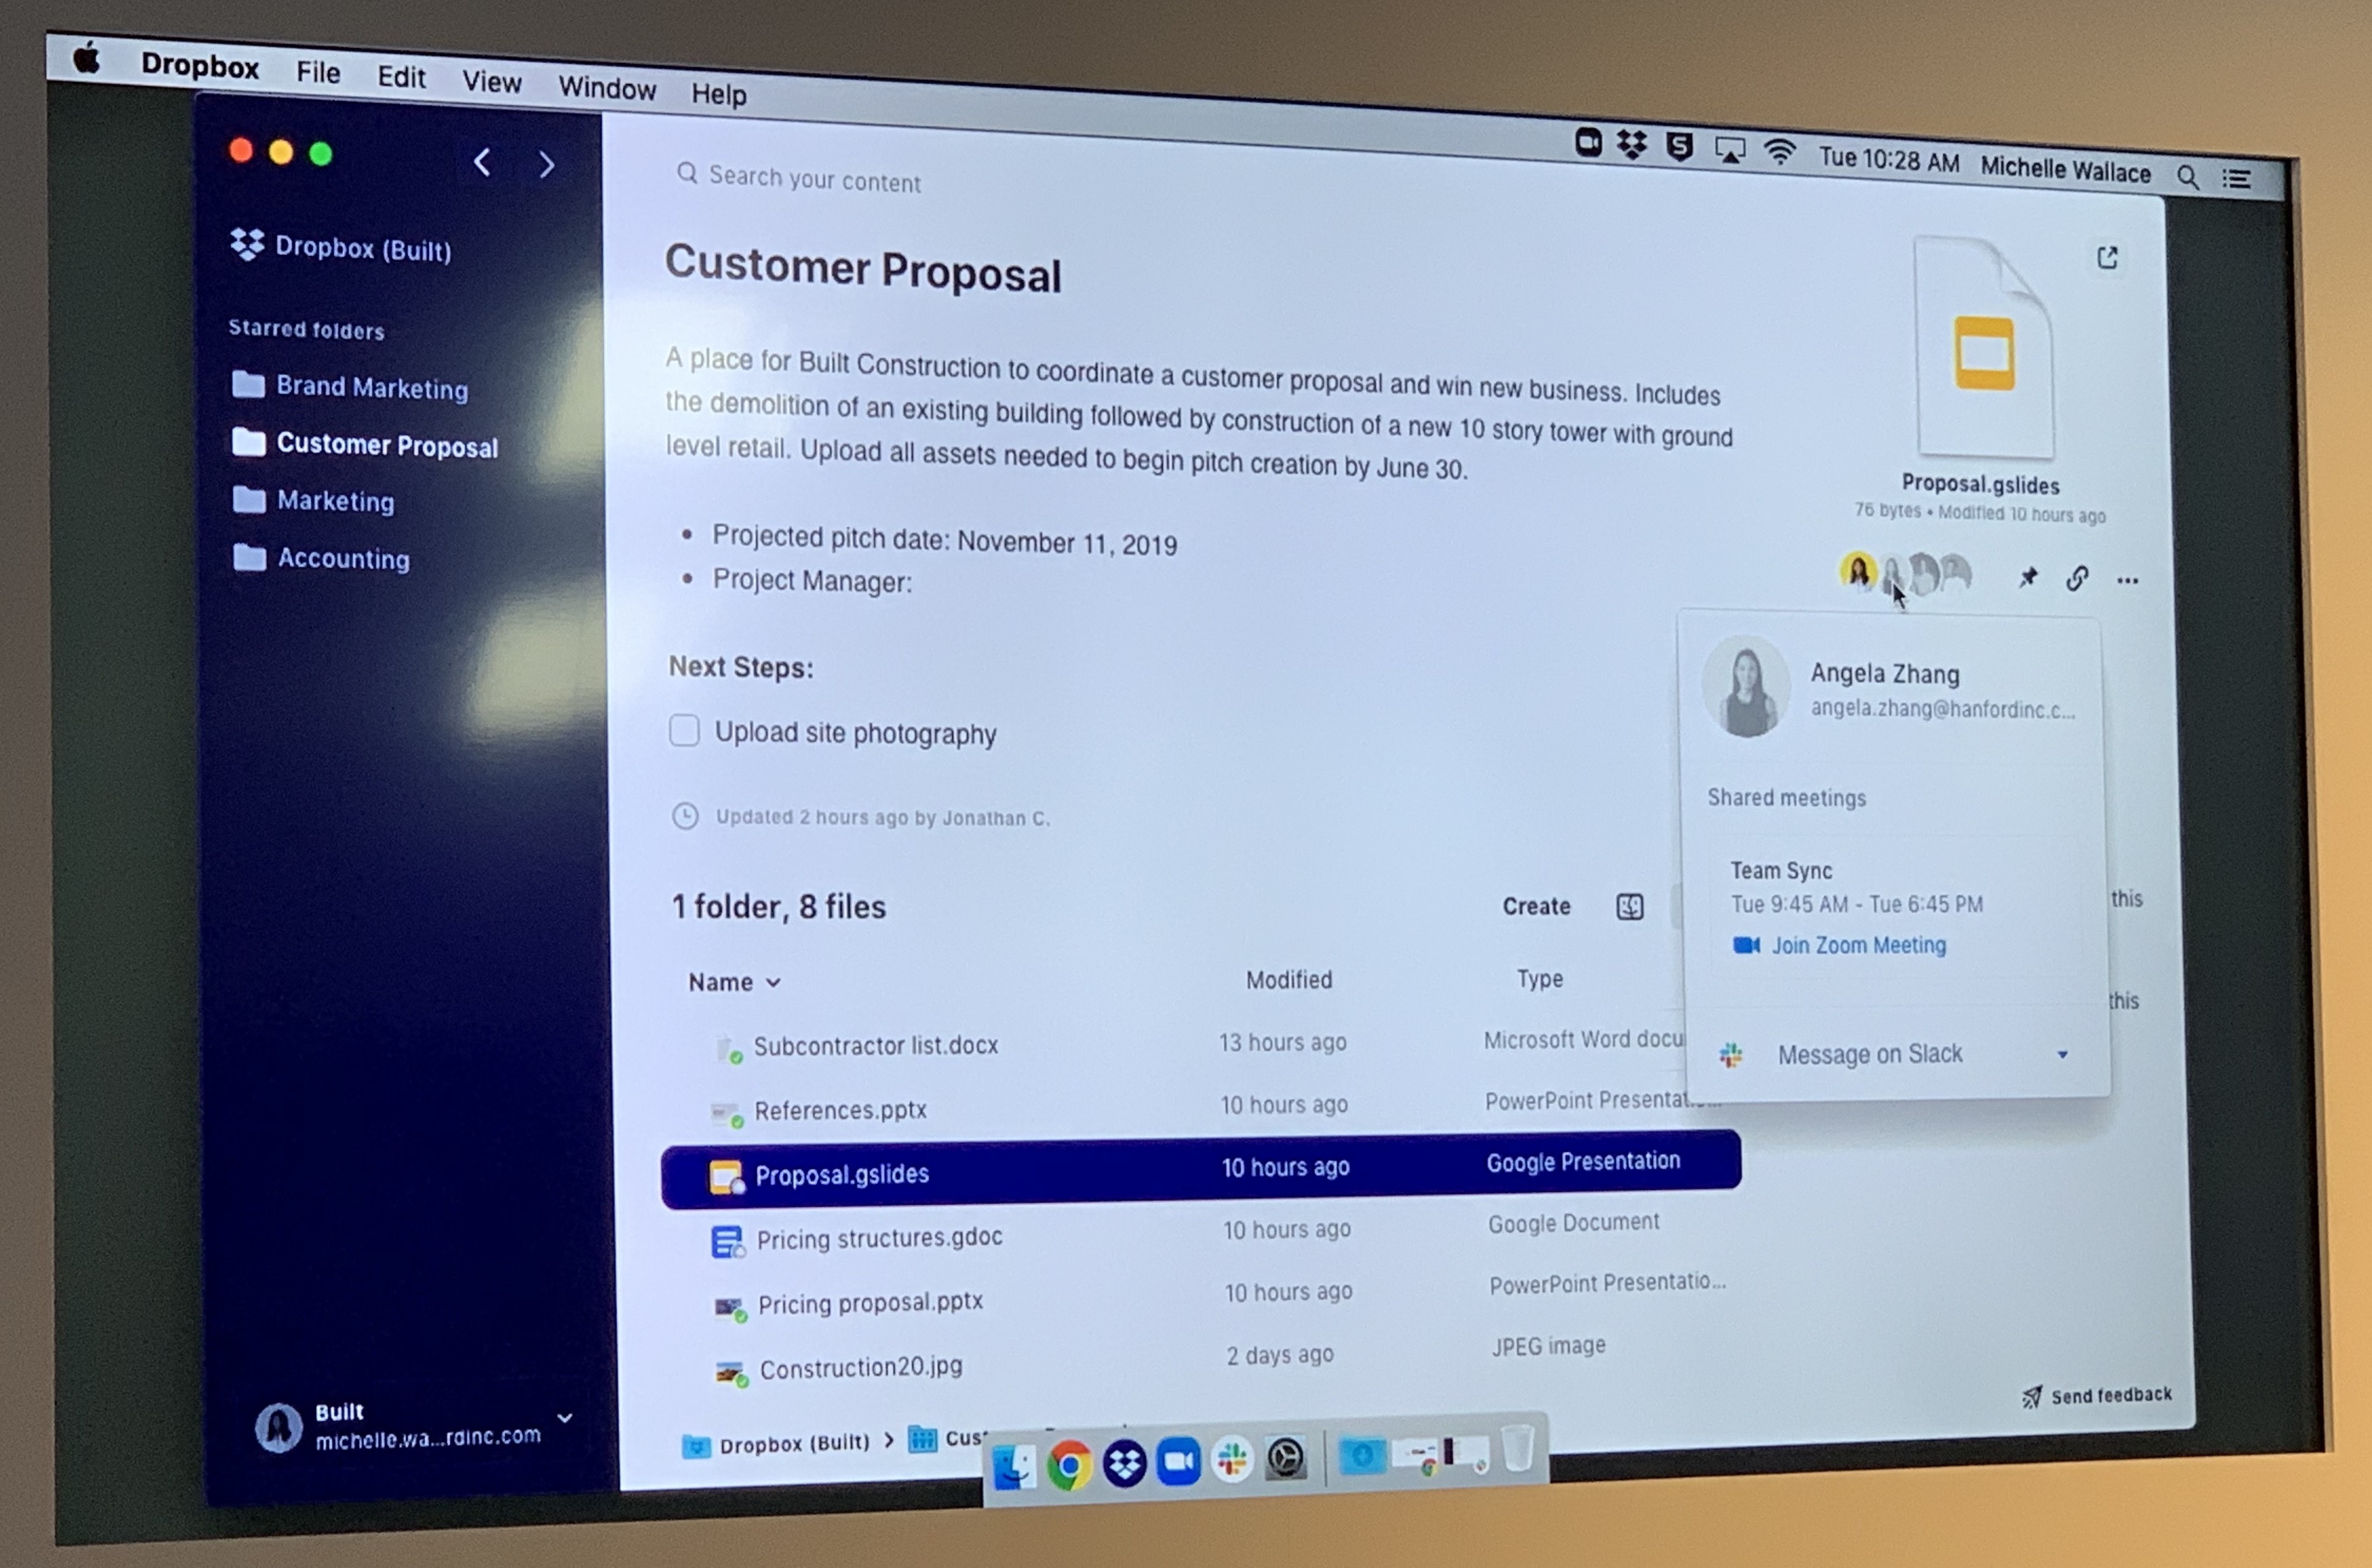 Dropbox relaunches as an enterprise collaboration workspace